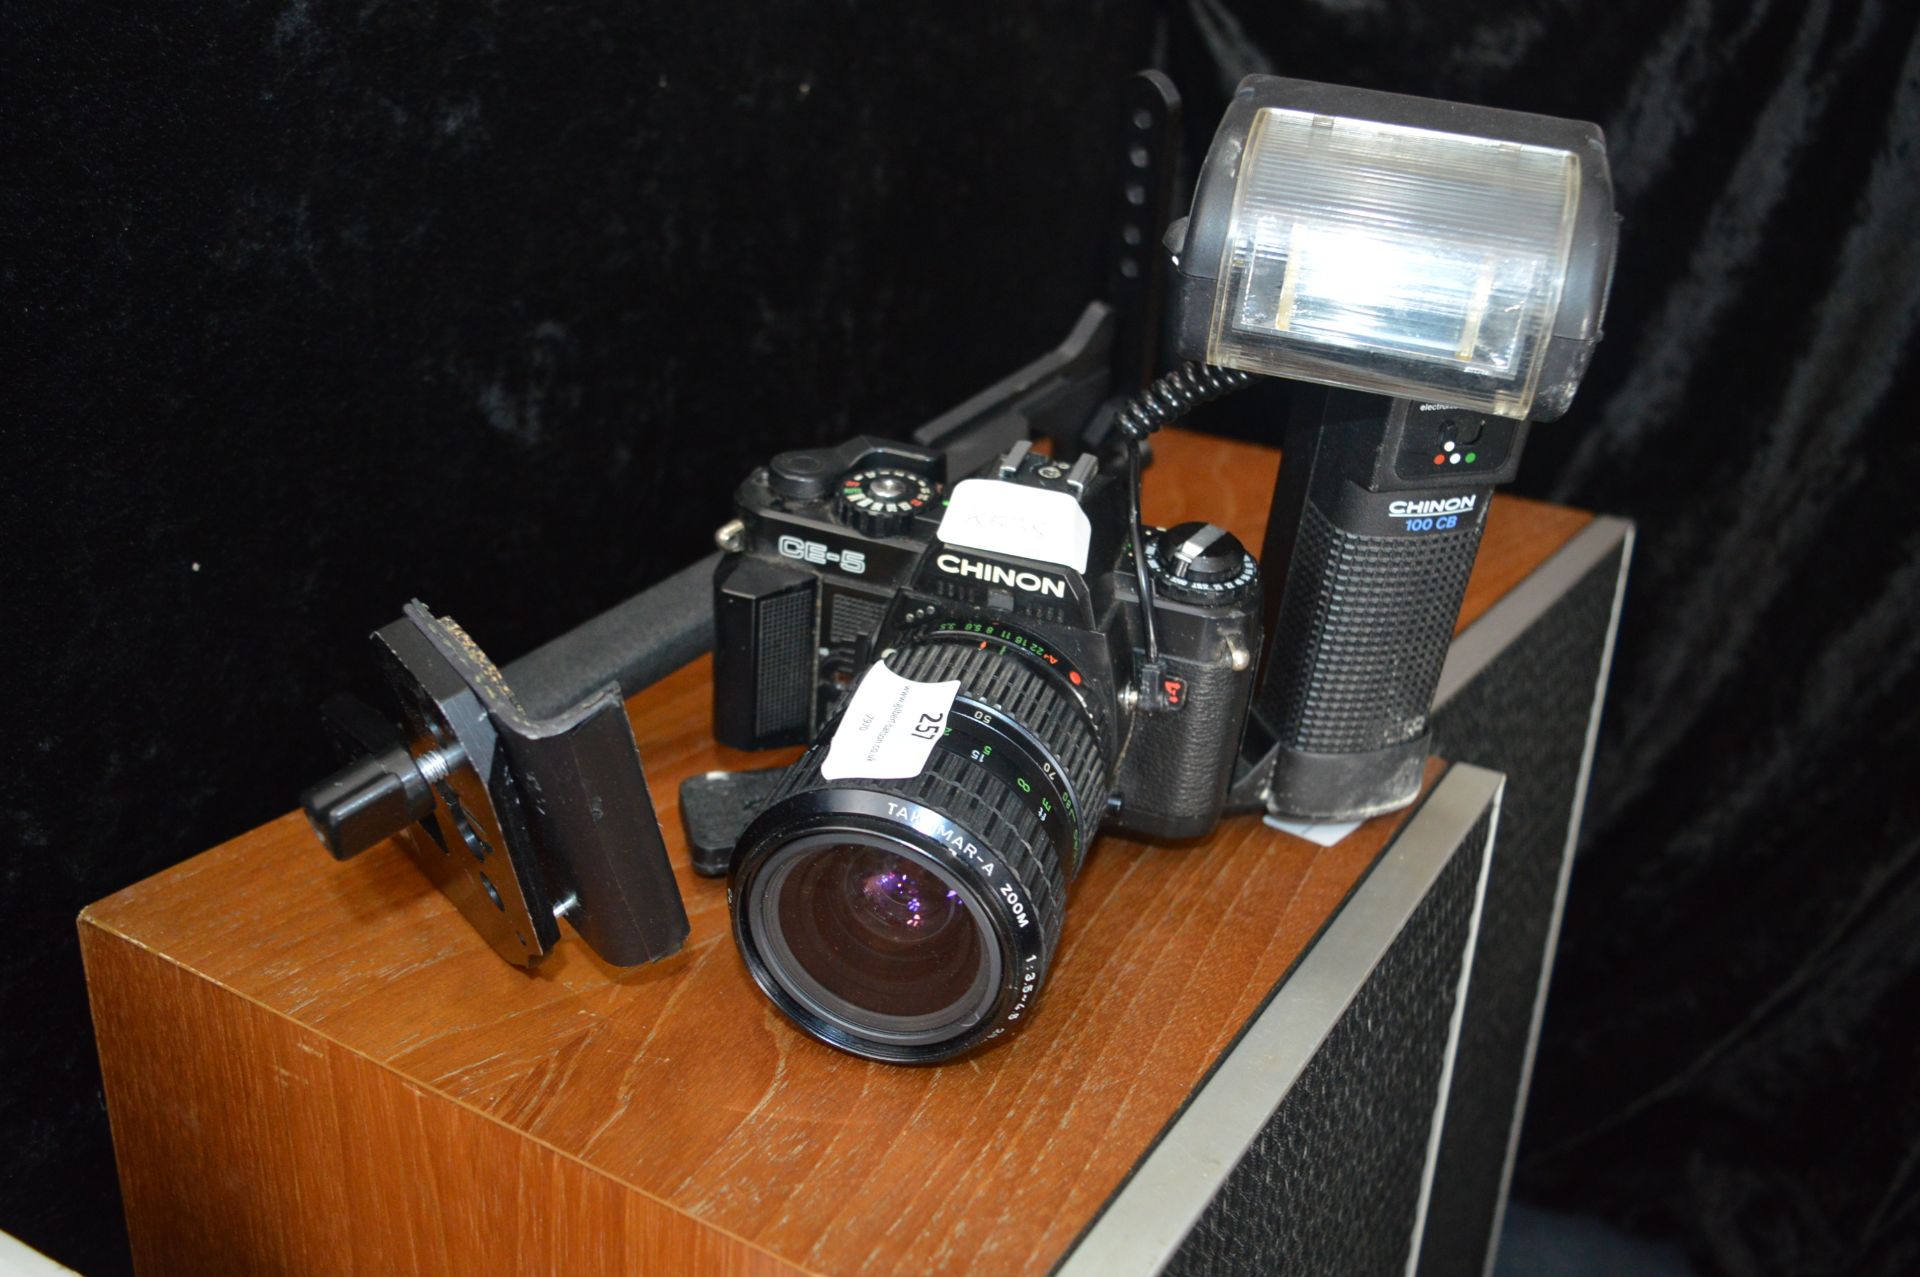 Chinon CE/5 SLR Camera with Flash Unit